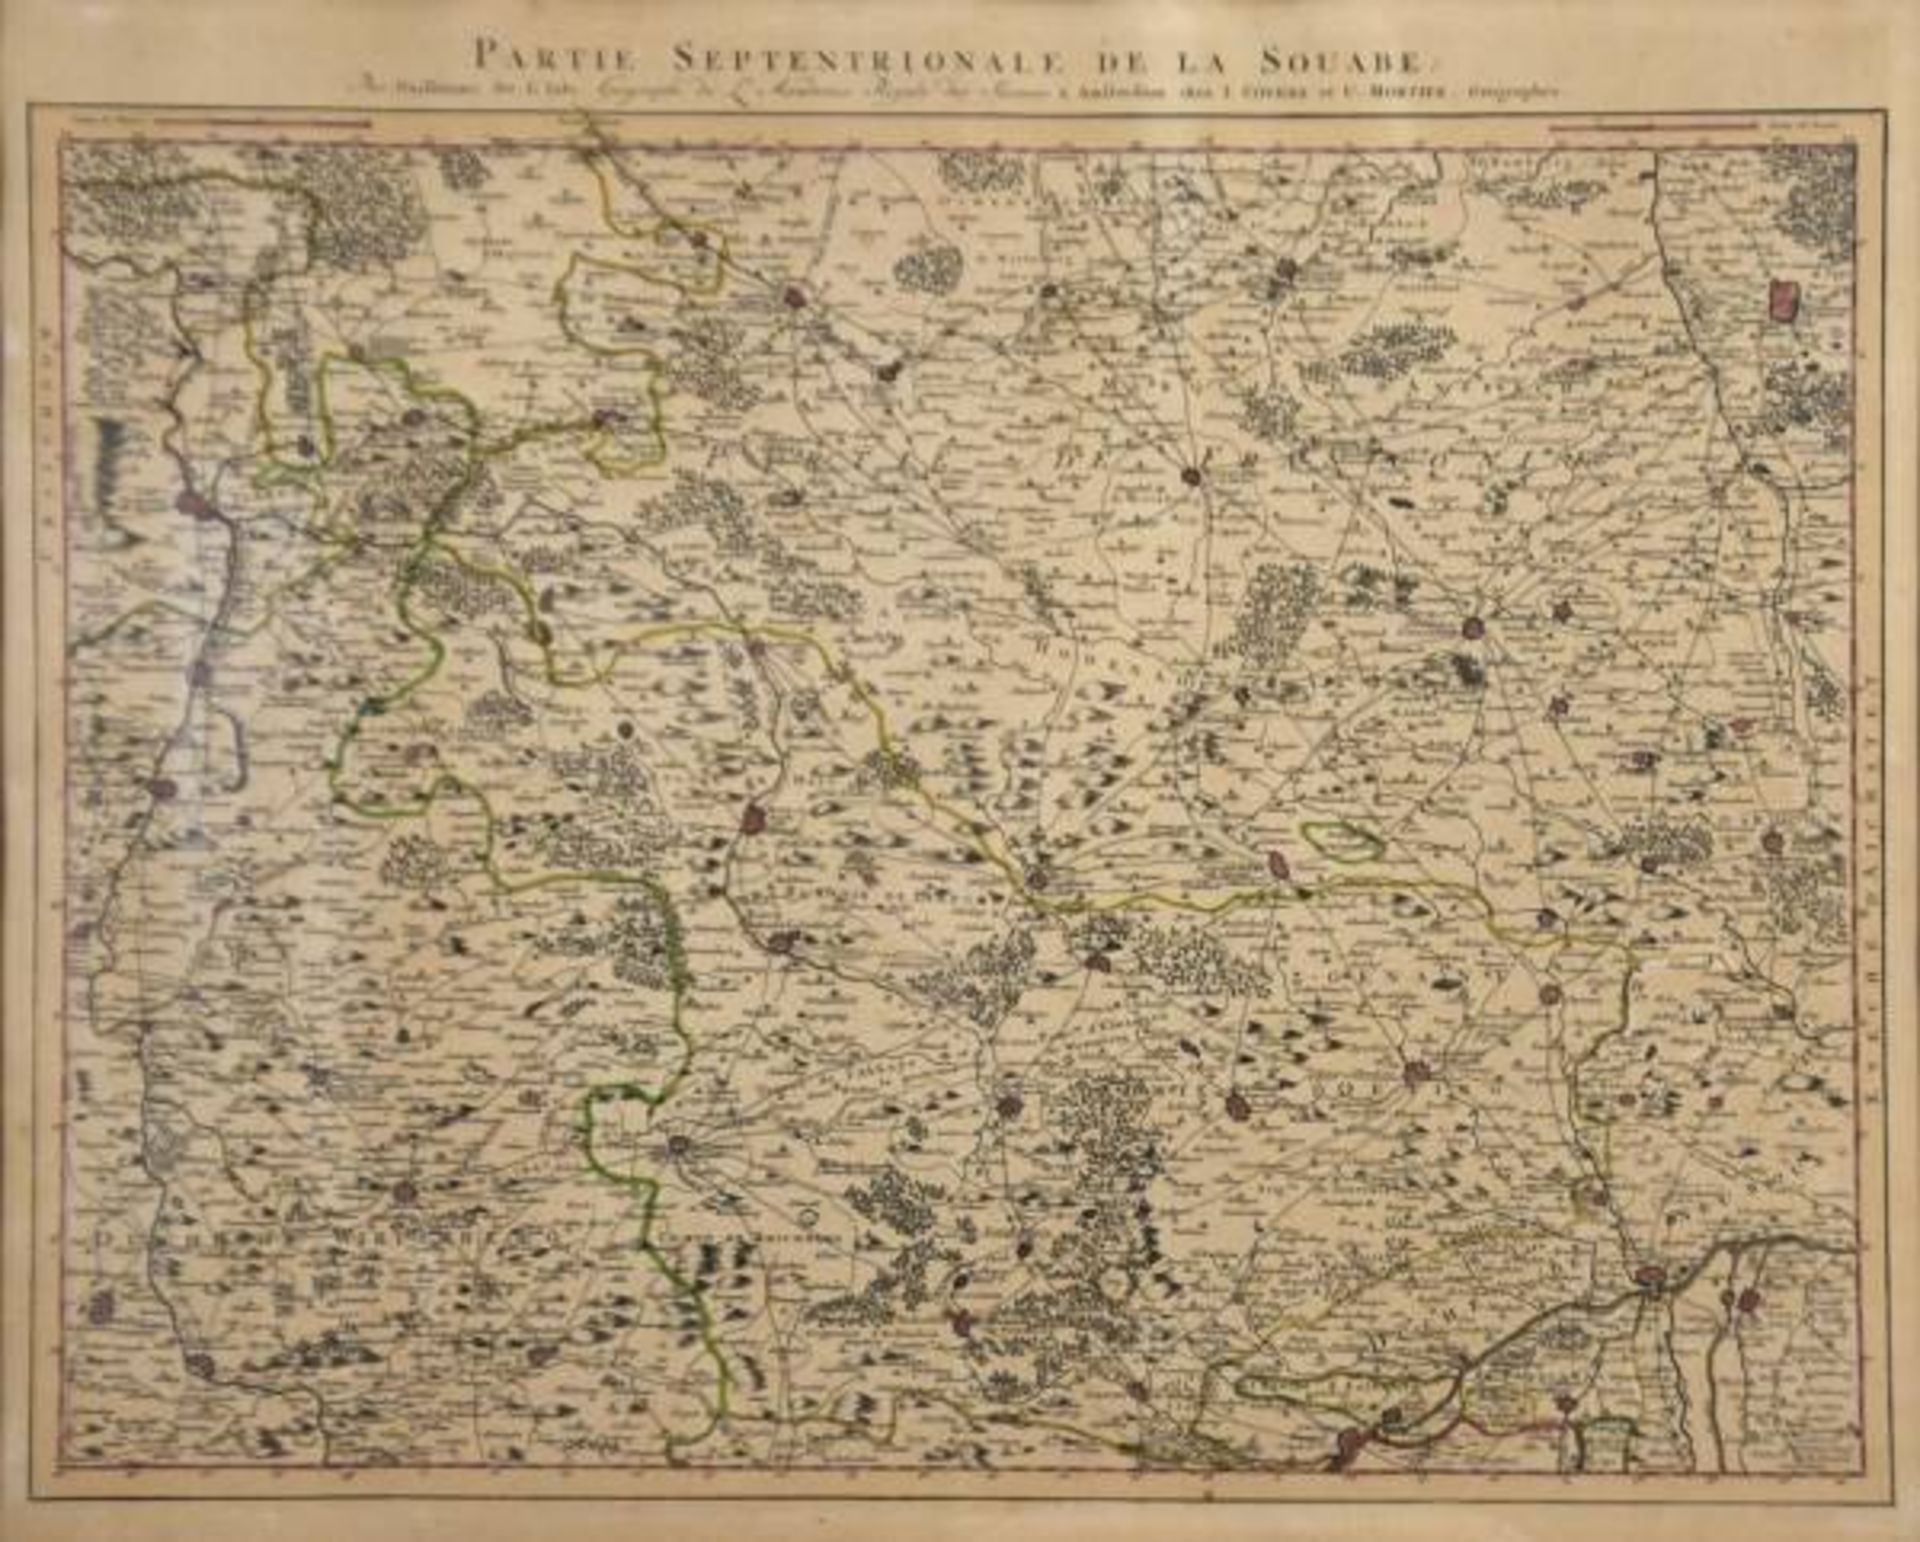 LANDKARTE SCHWABEN "Partie Septentrionale de la Souabe", kolorierter Kupferstich, 18. Jahrhundert,